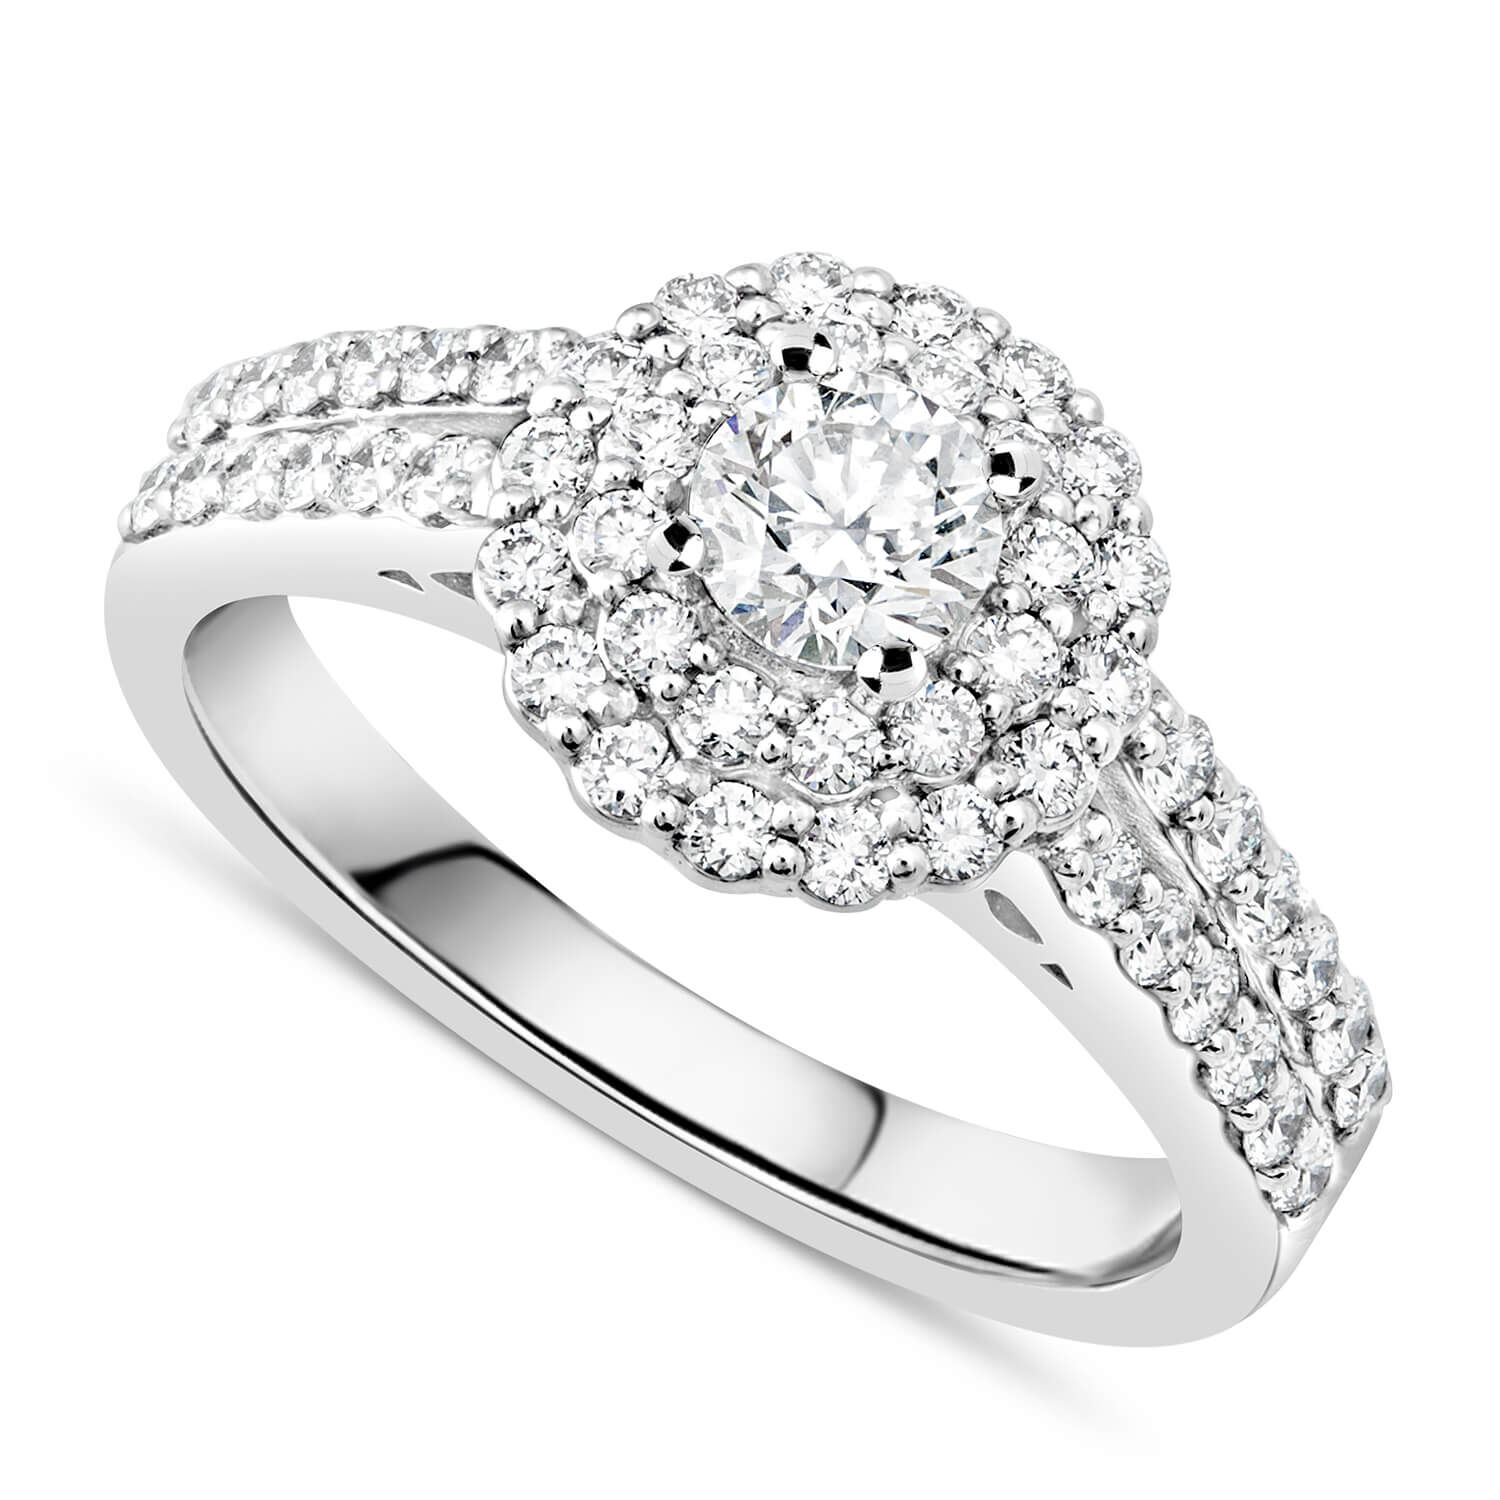 18ct White Gold Diamond Solitaire Engagement Ring | Miltons Diamonds